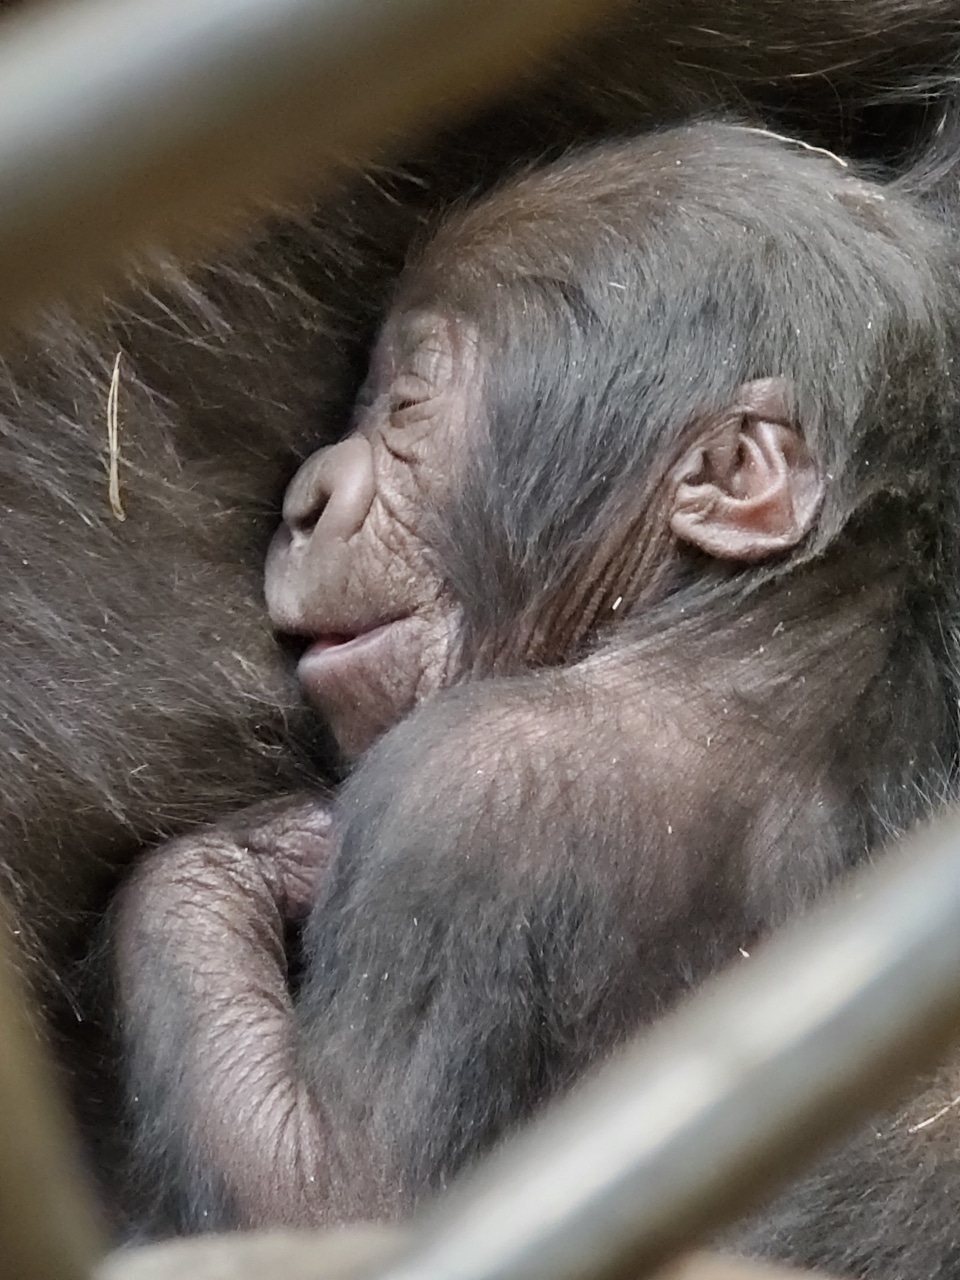 Willie B.'s grandchild was just born at Zoo Atlanta